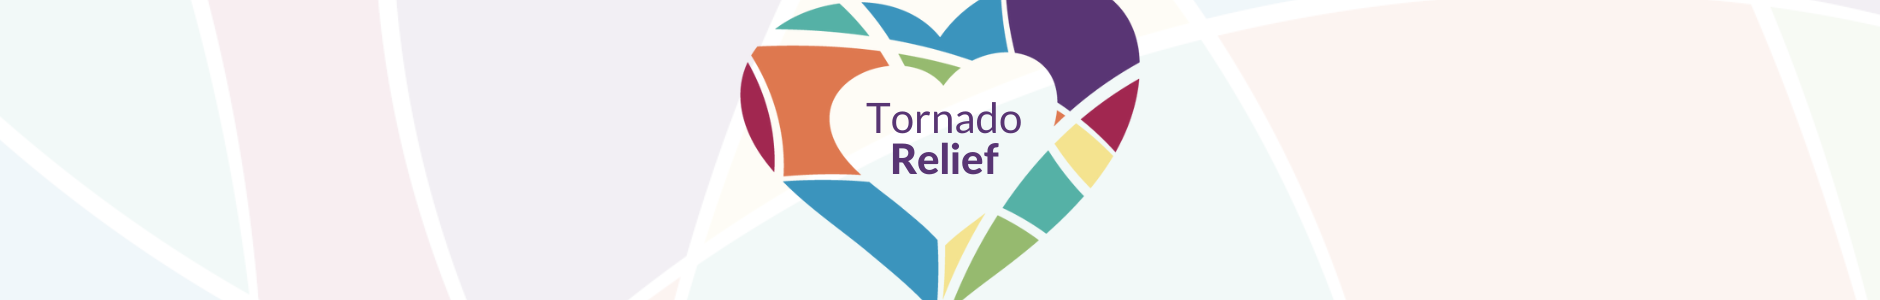 Tornado Relief